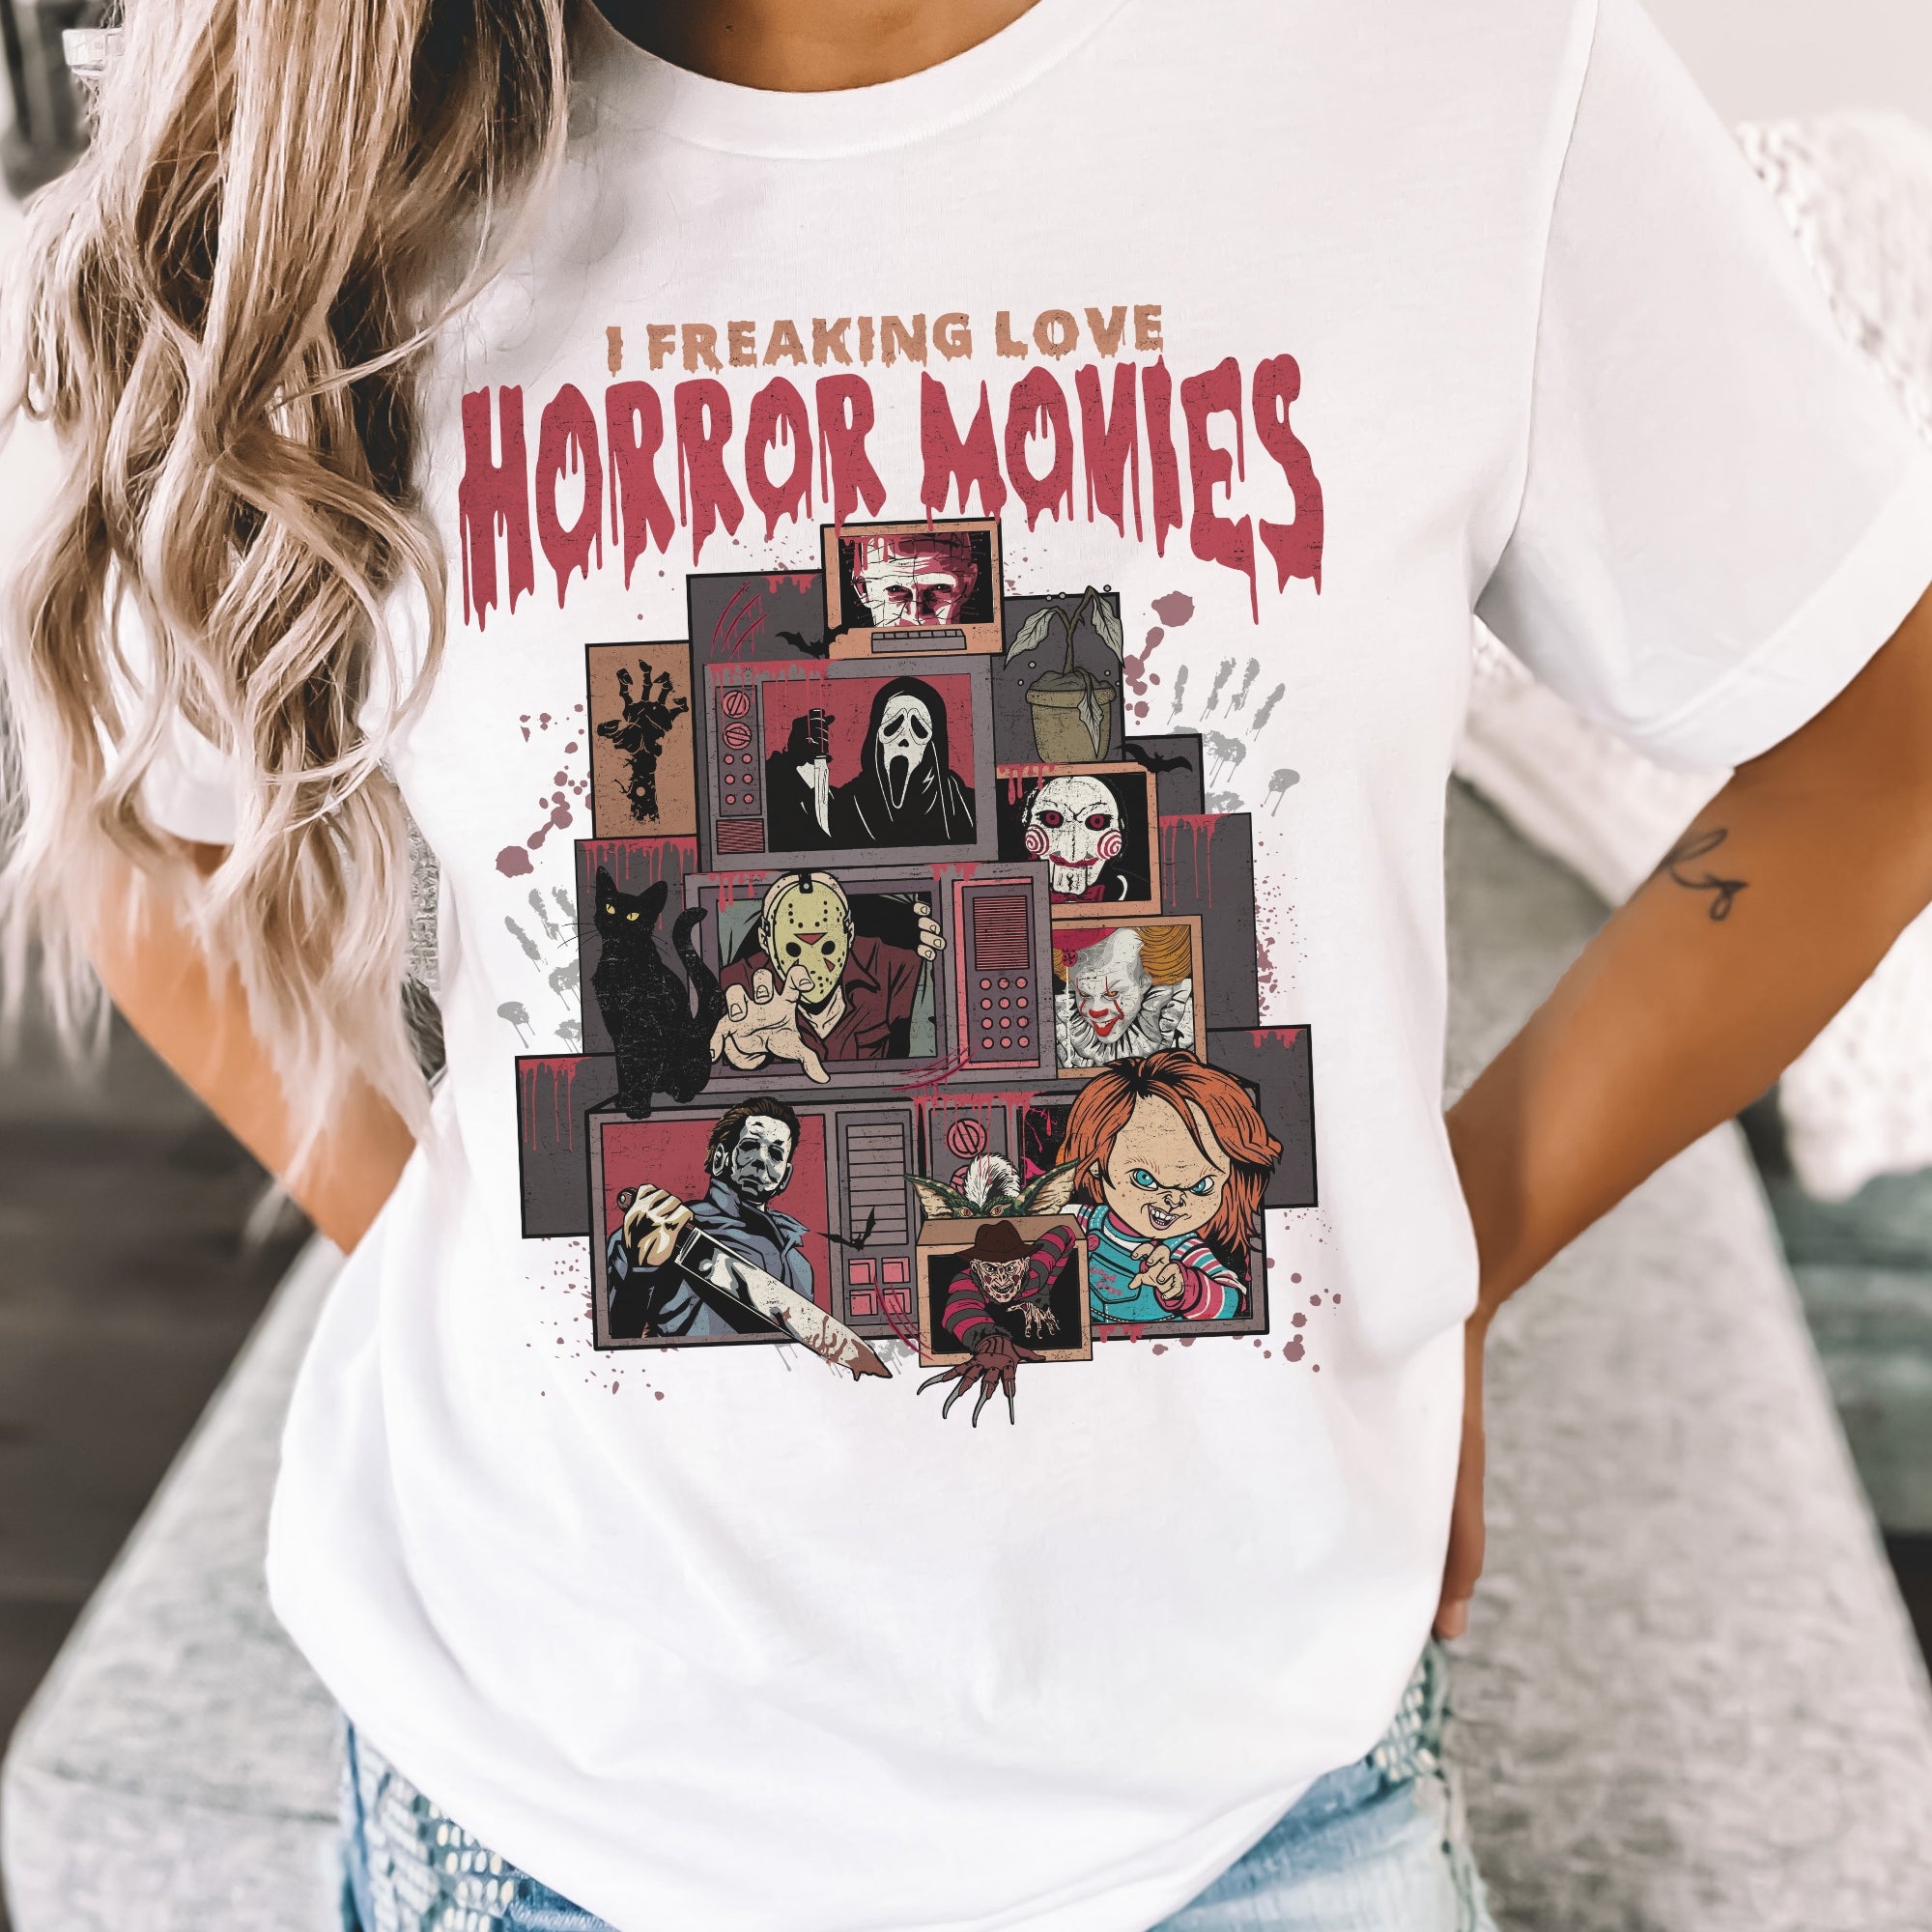 I Love Horror Movies || Adult Short Sleeve Tee